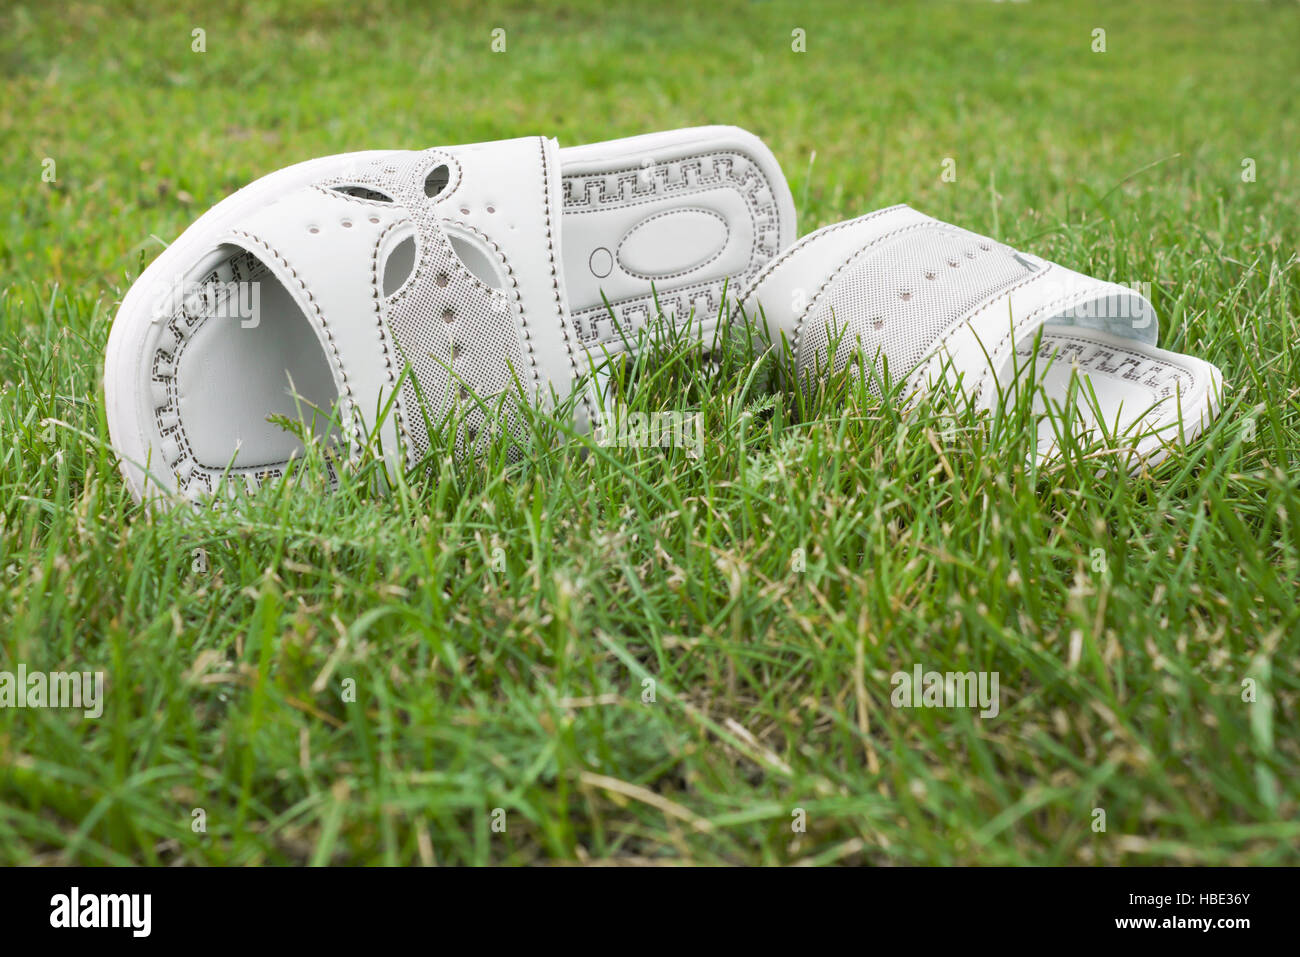 Sandalen auf dem Rasen Stockfoto